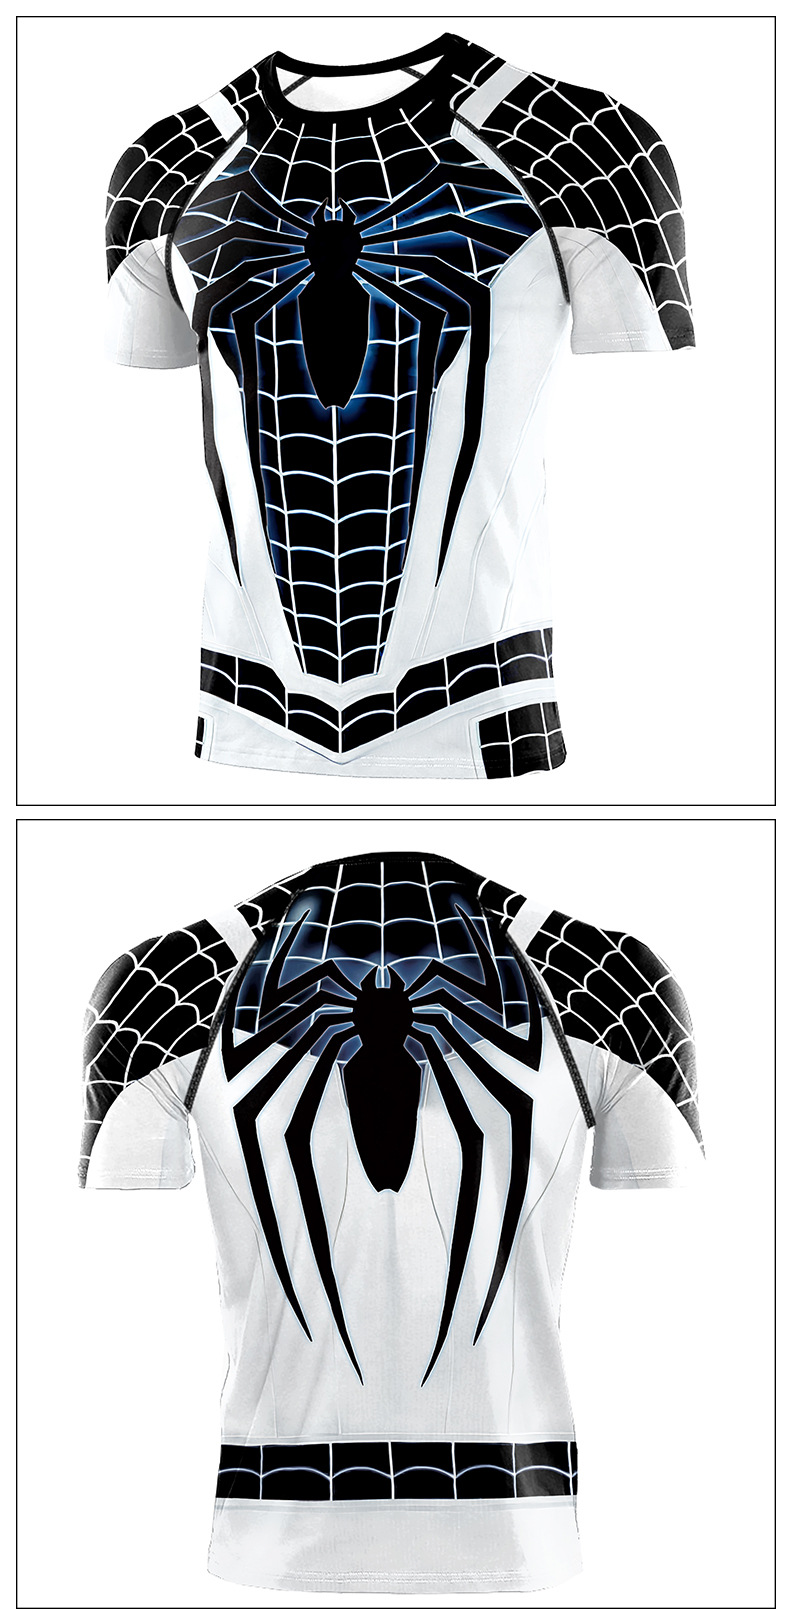 Crewneck slim fit Black white spider man workout tee shirt short sleeve - back - front